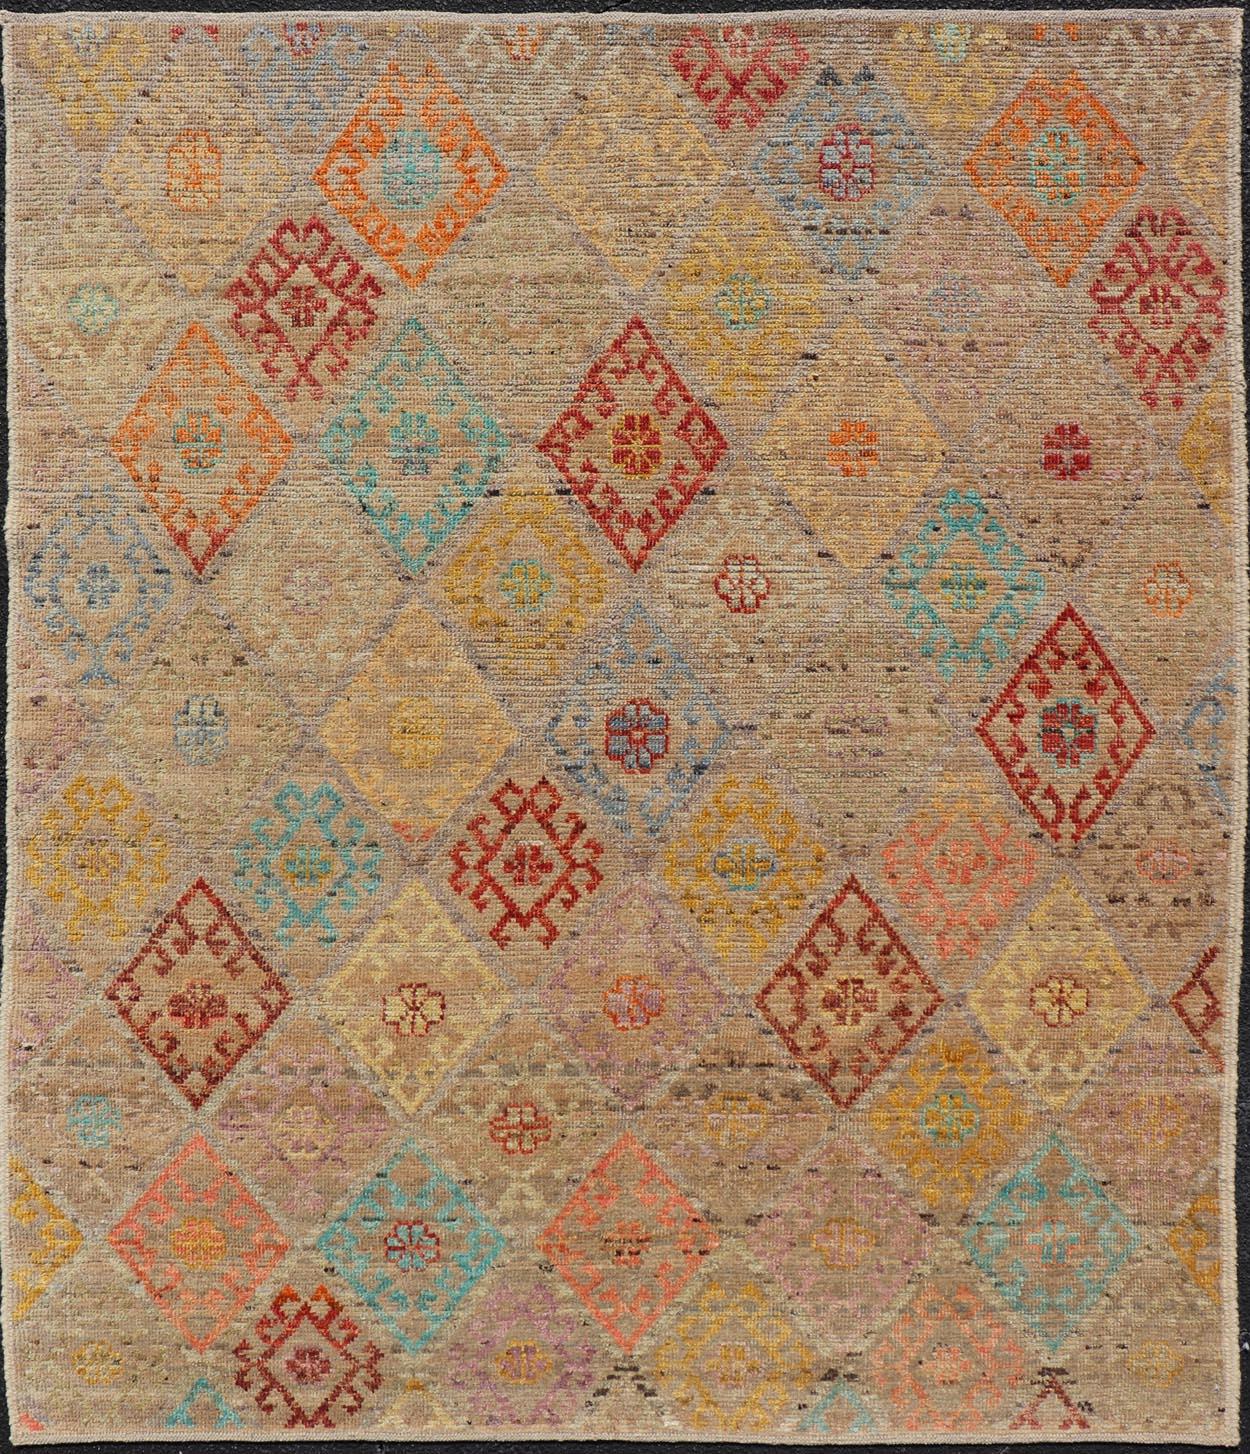 Modern Tribal Rug in Wool with Sub-Geometric Diamond Design in Colors